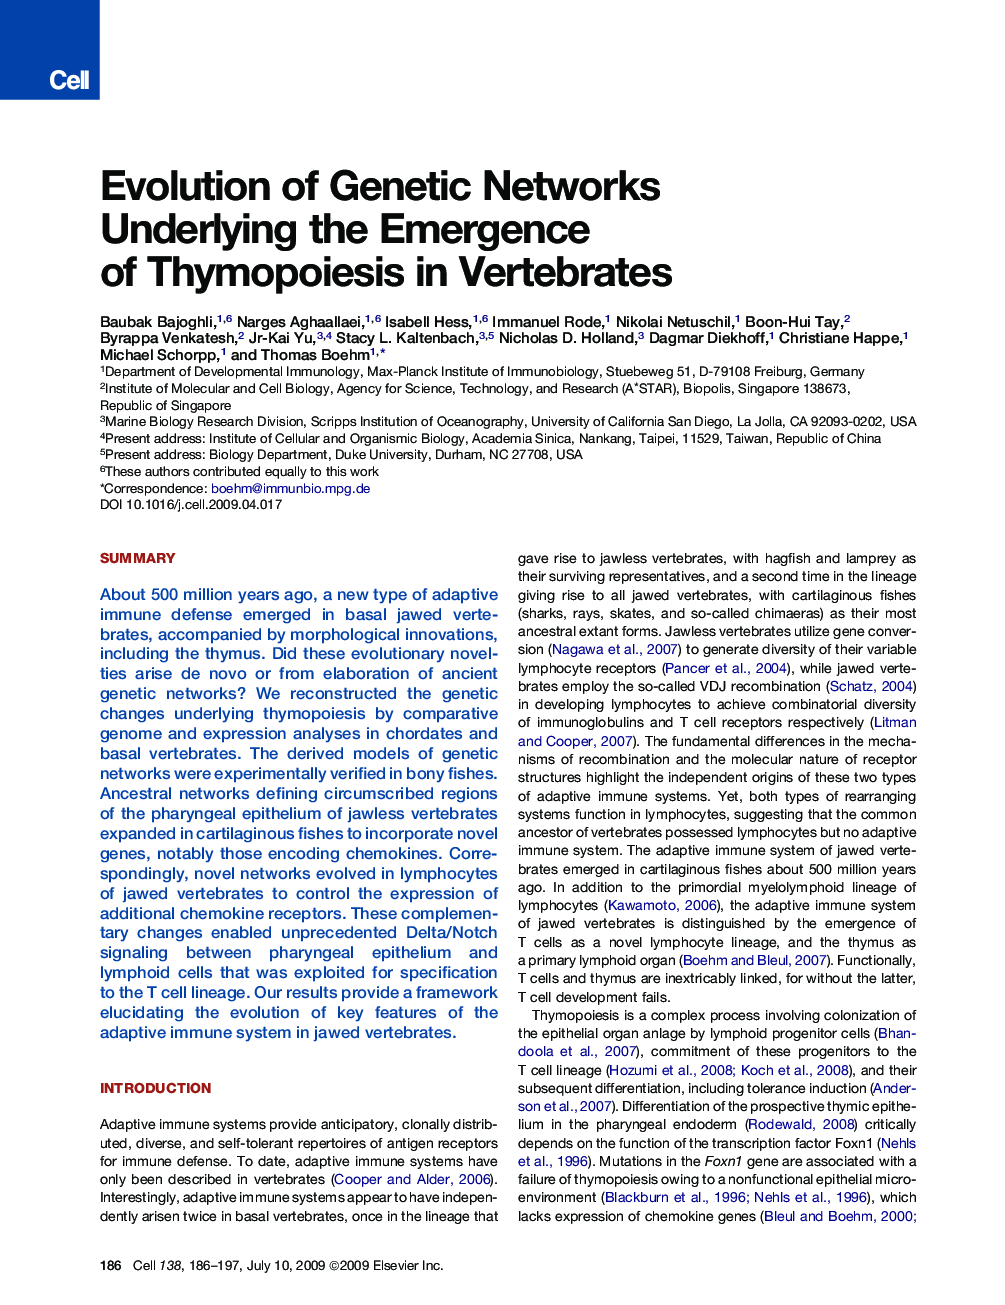 Evolution of Genetic Networks Underlying the Emergence of Thymopoiesis in Vertebrates